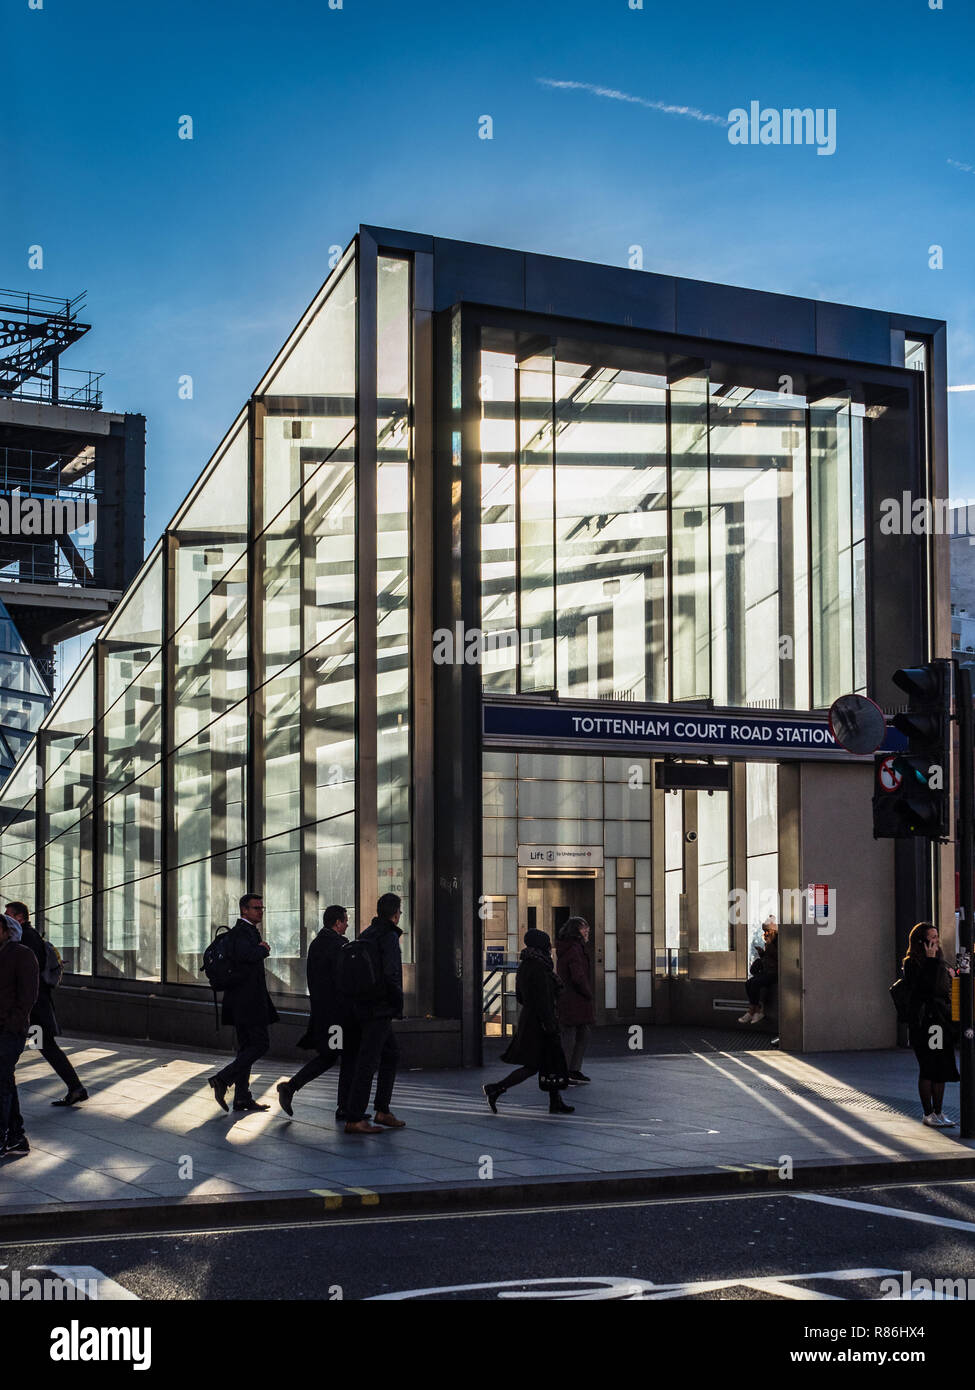 Tottenham Court Road Station - nuovo ingresso sulla plaza Outside Centre Point Tower. Foto Stock